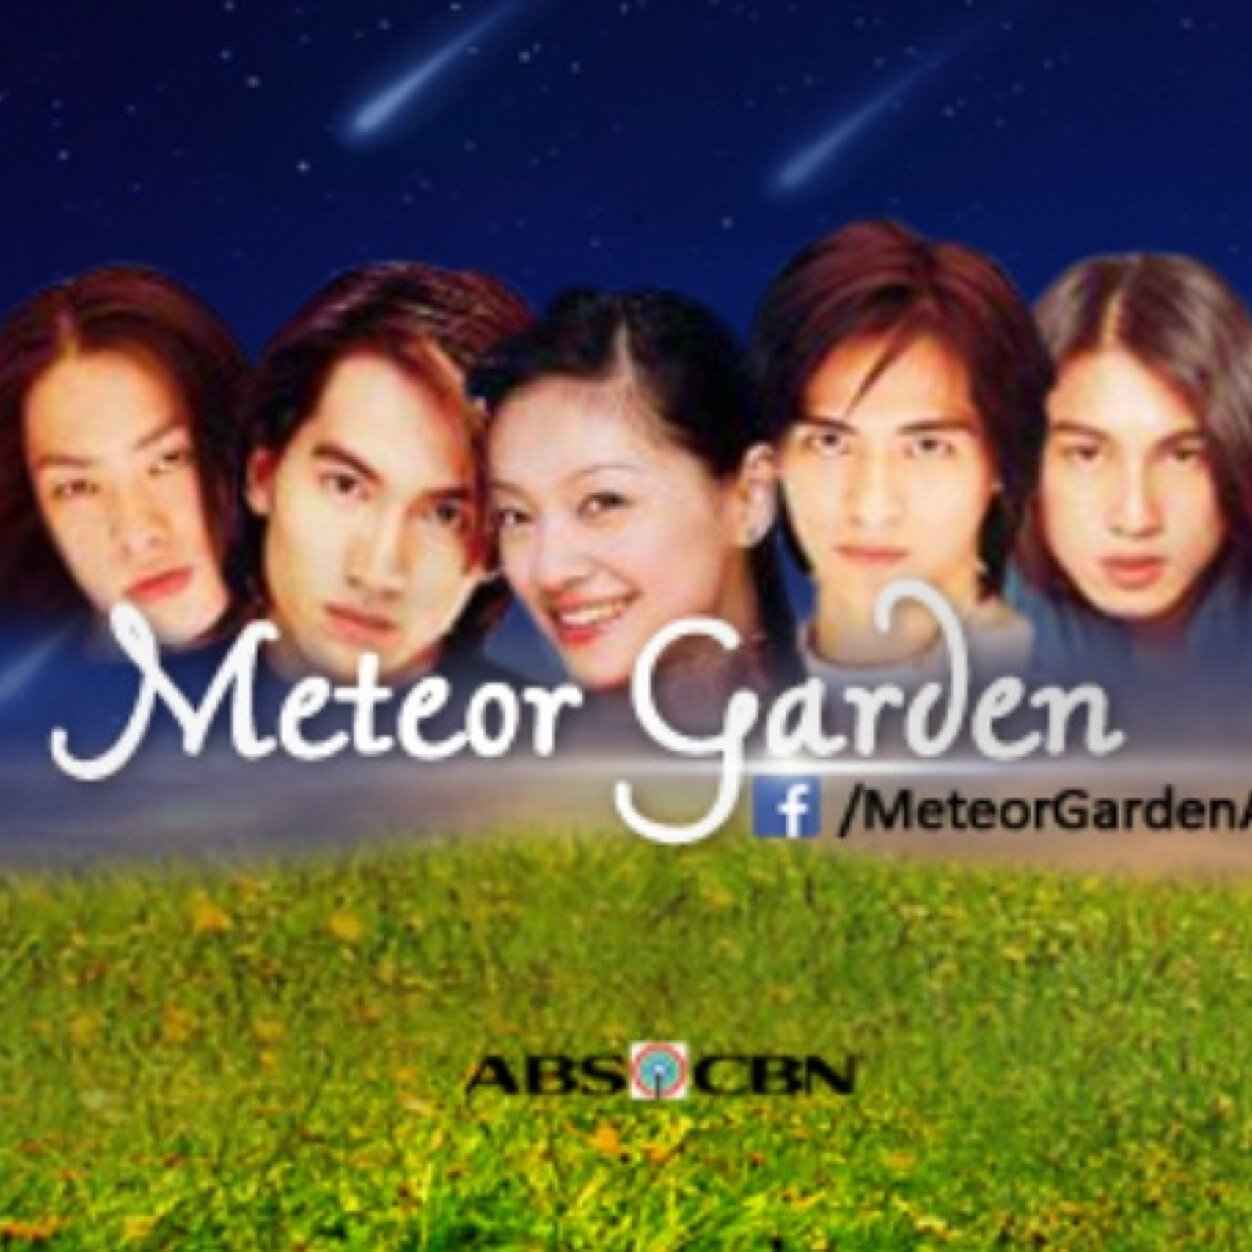 Wallpaper Meteor Garden #wallpaper #lockscreen #meteor #garden